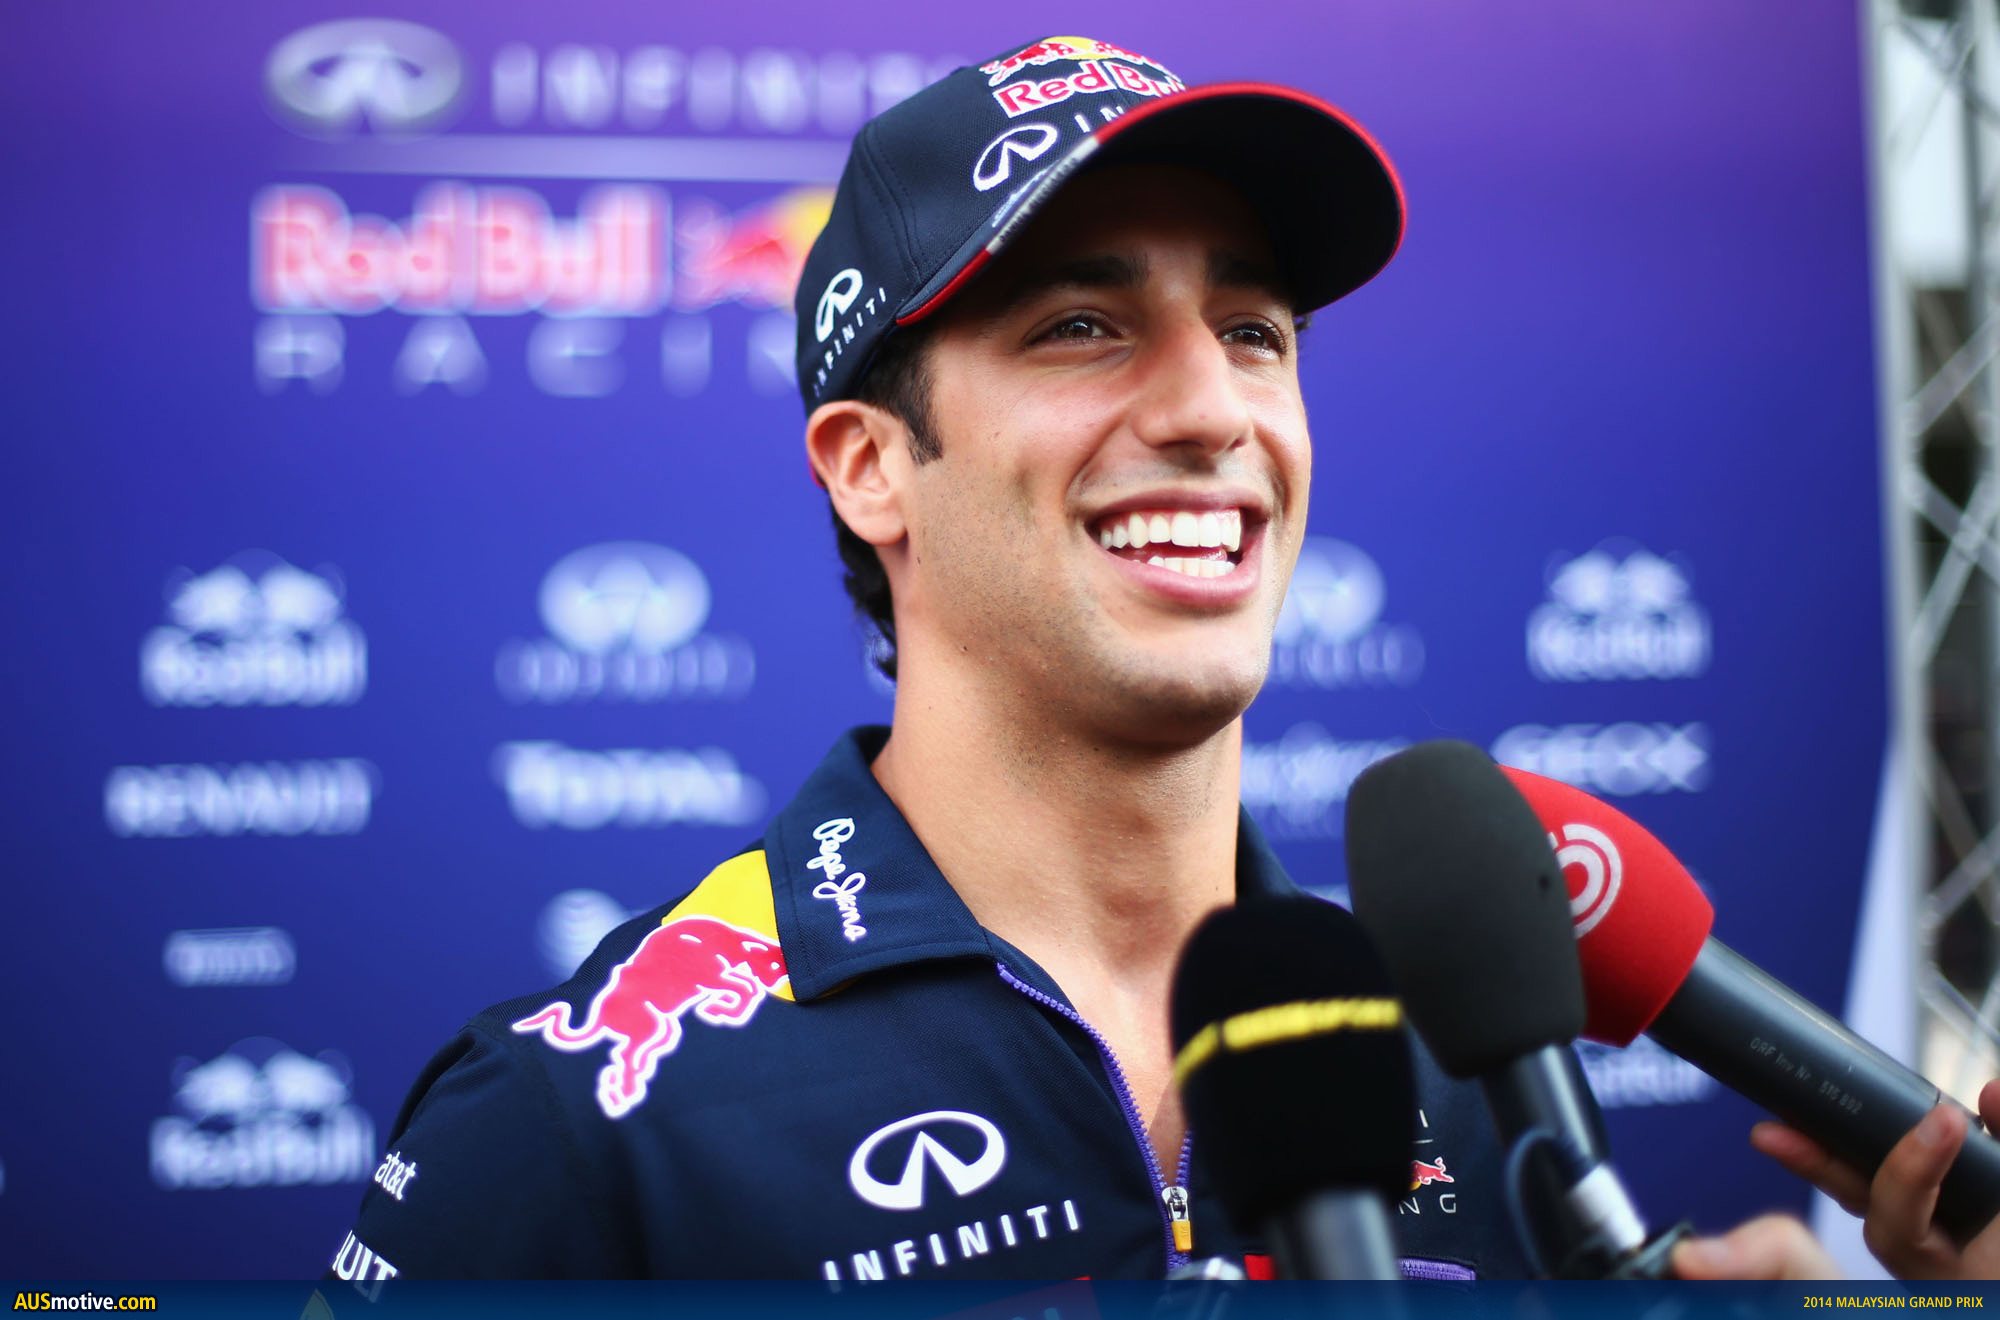 AUSmotive.com » Horner praises Ricciardo’s “brilliant” start